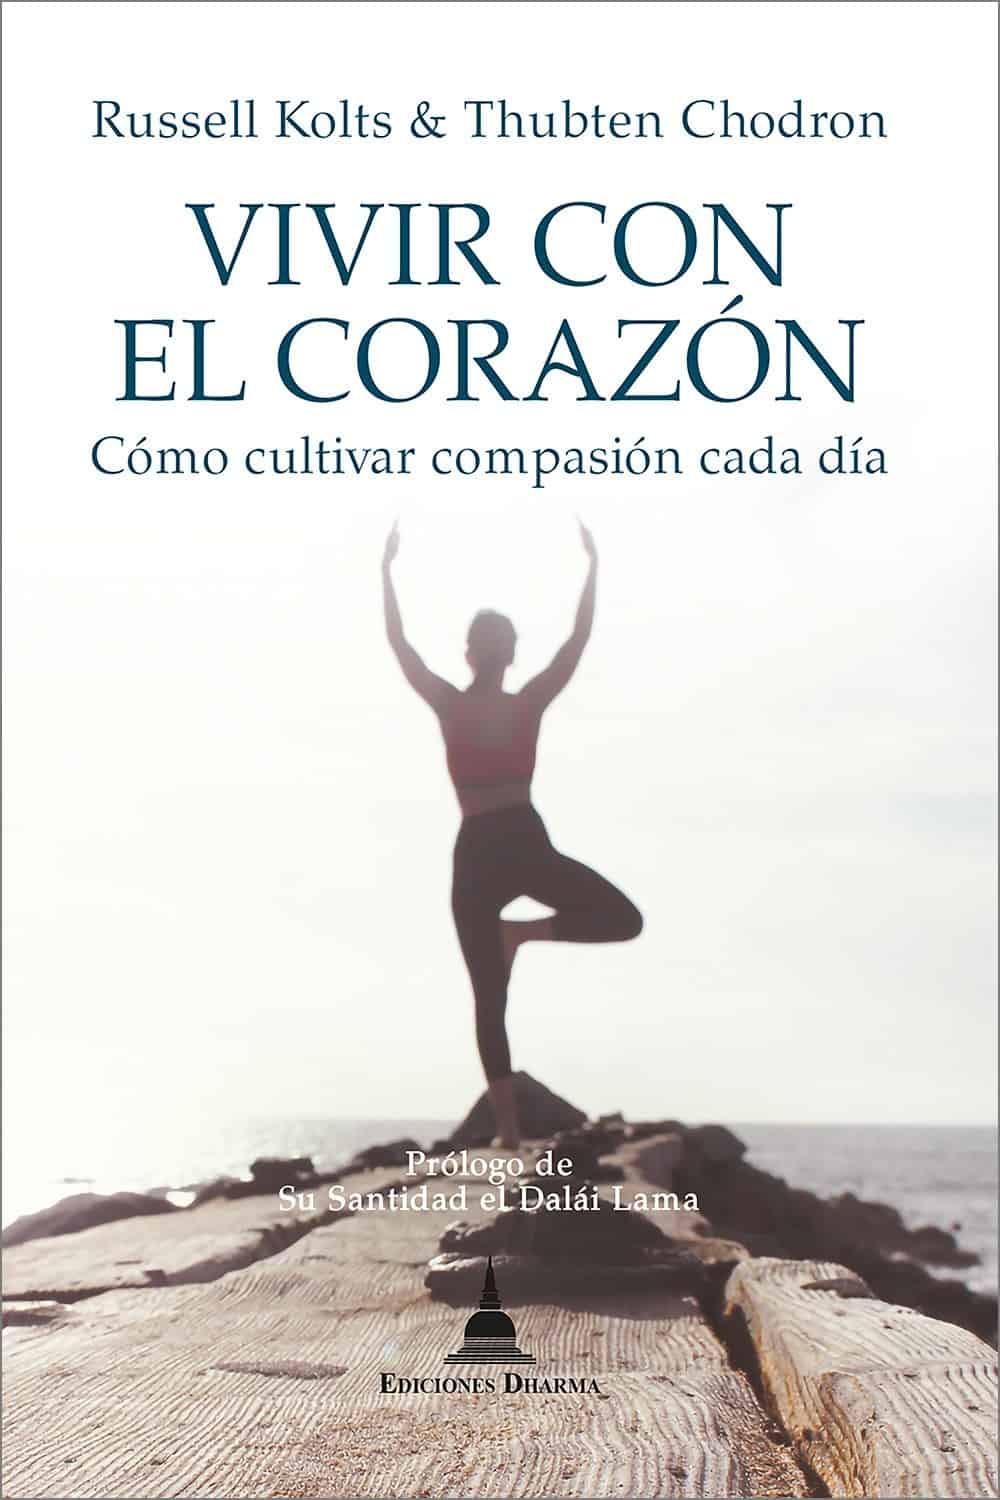 Okładka książki An Open Hearted Life po hiszpańsku